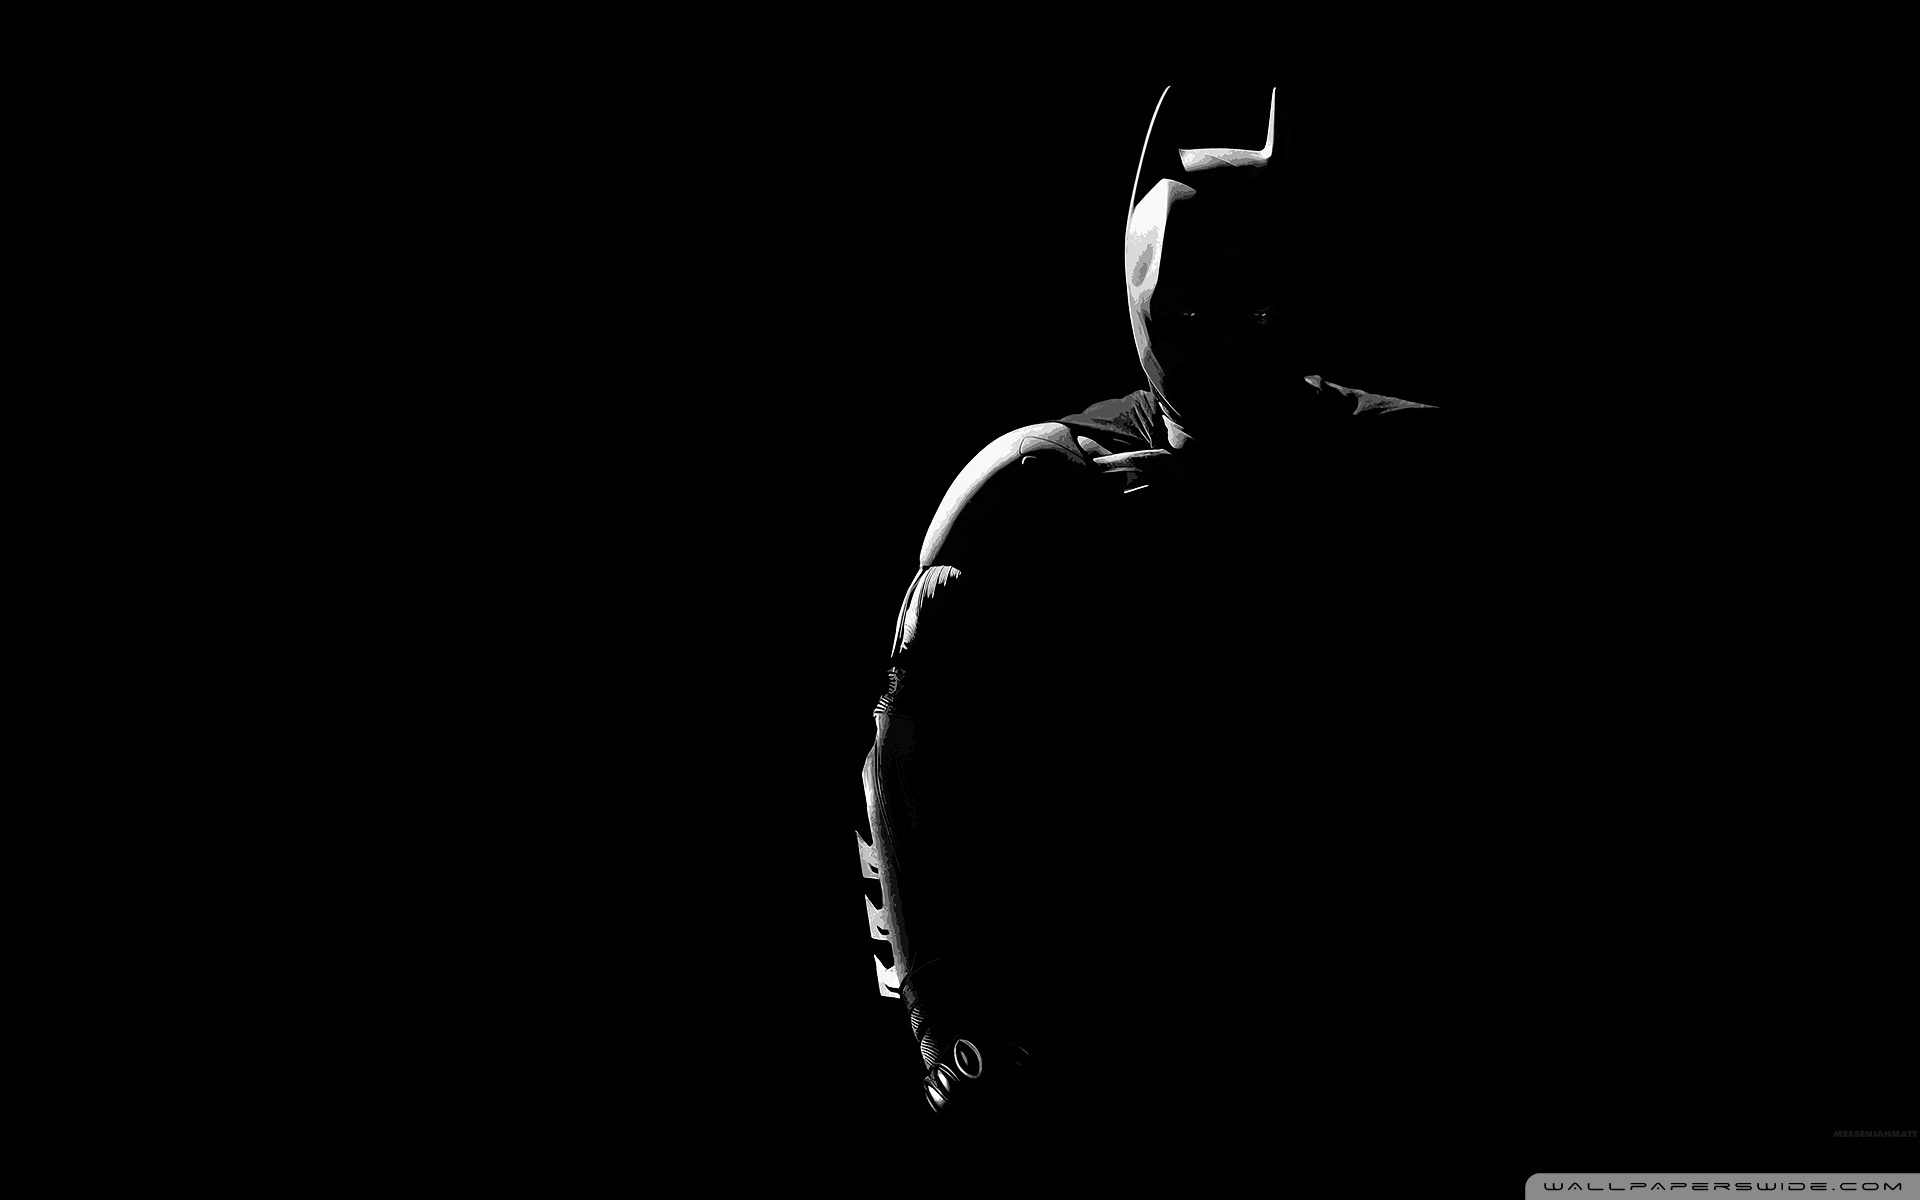 batman backgrounds - Google Search  Batman tattoo, Batman wallpaper, Batman  backgrounds